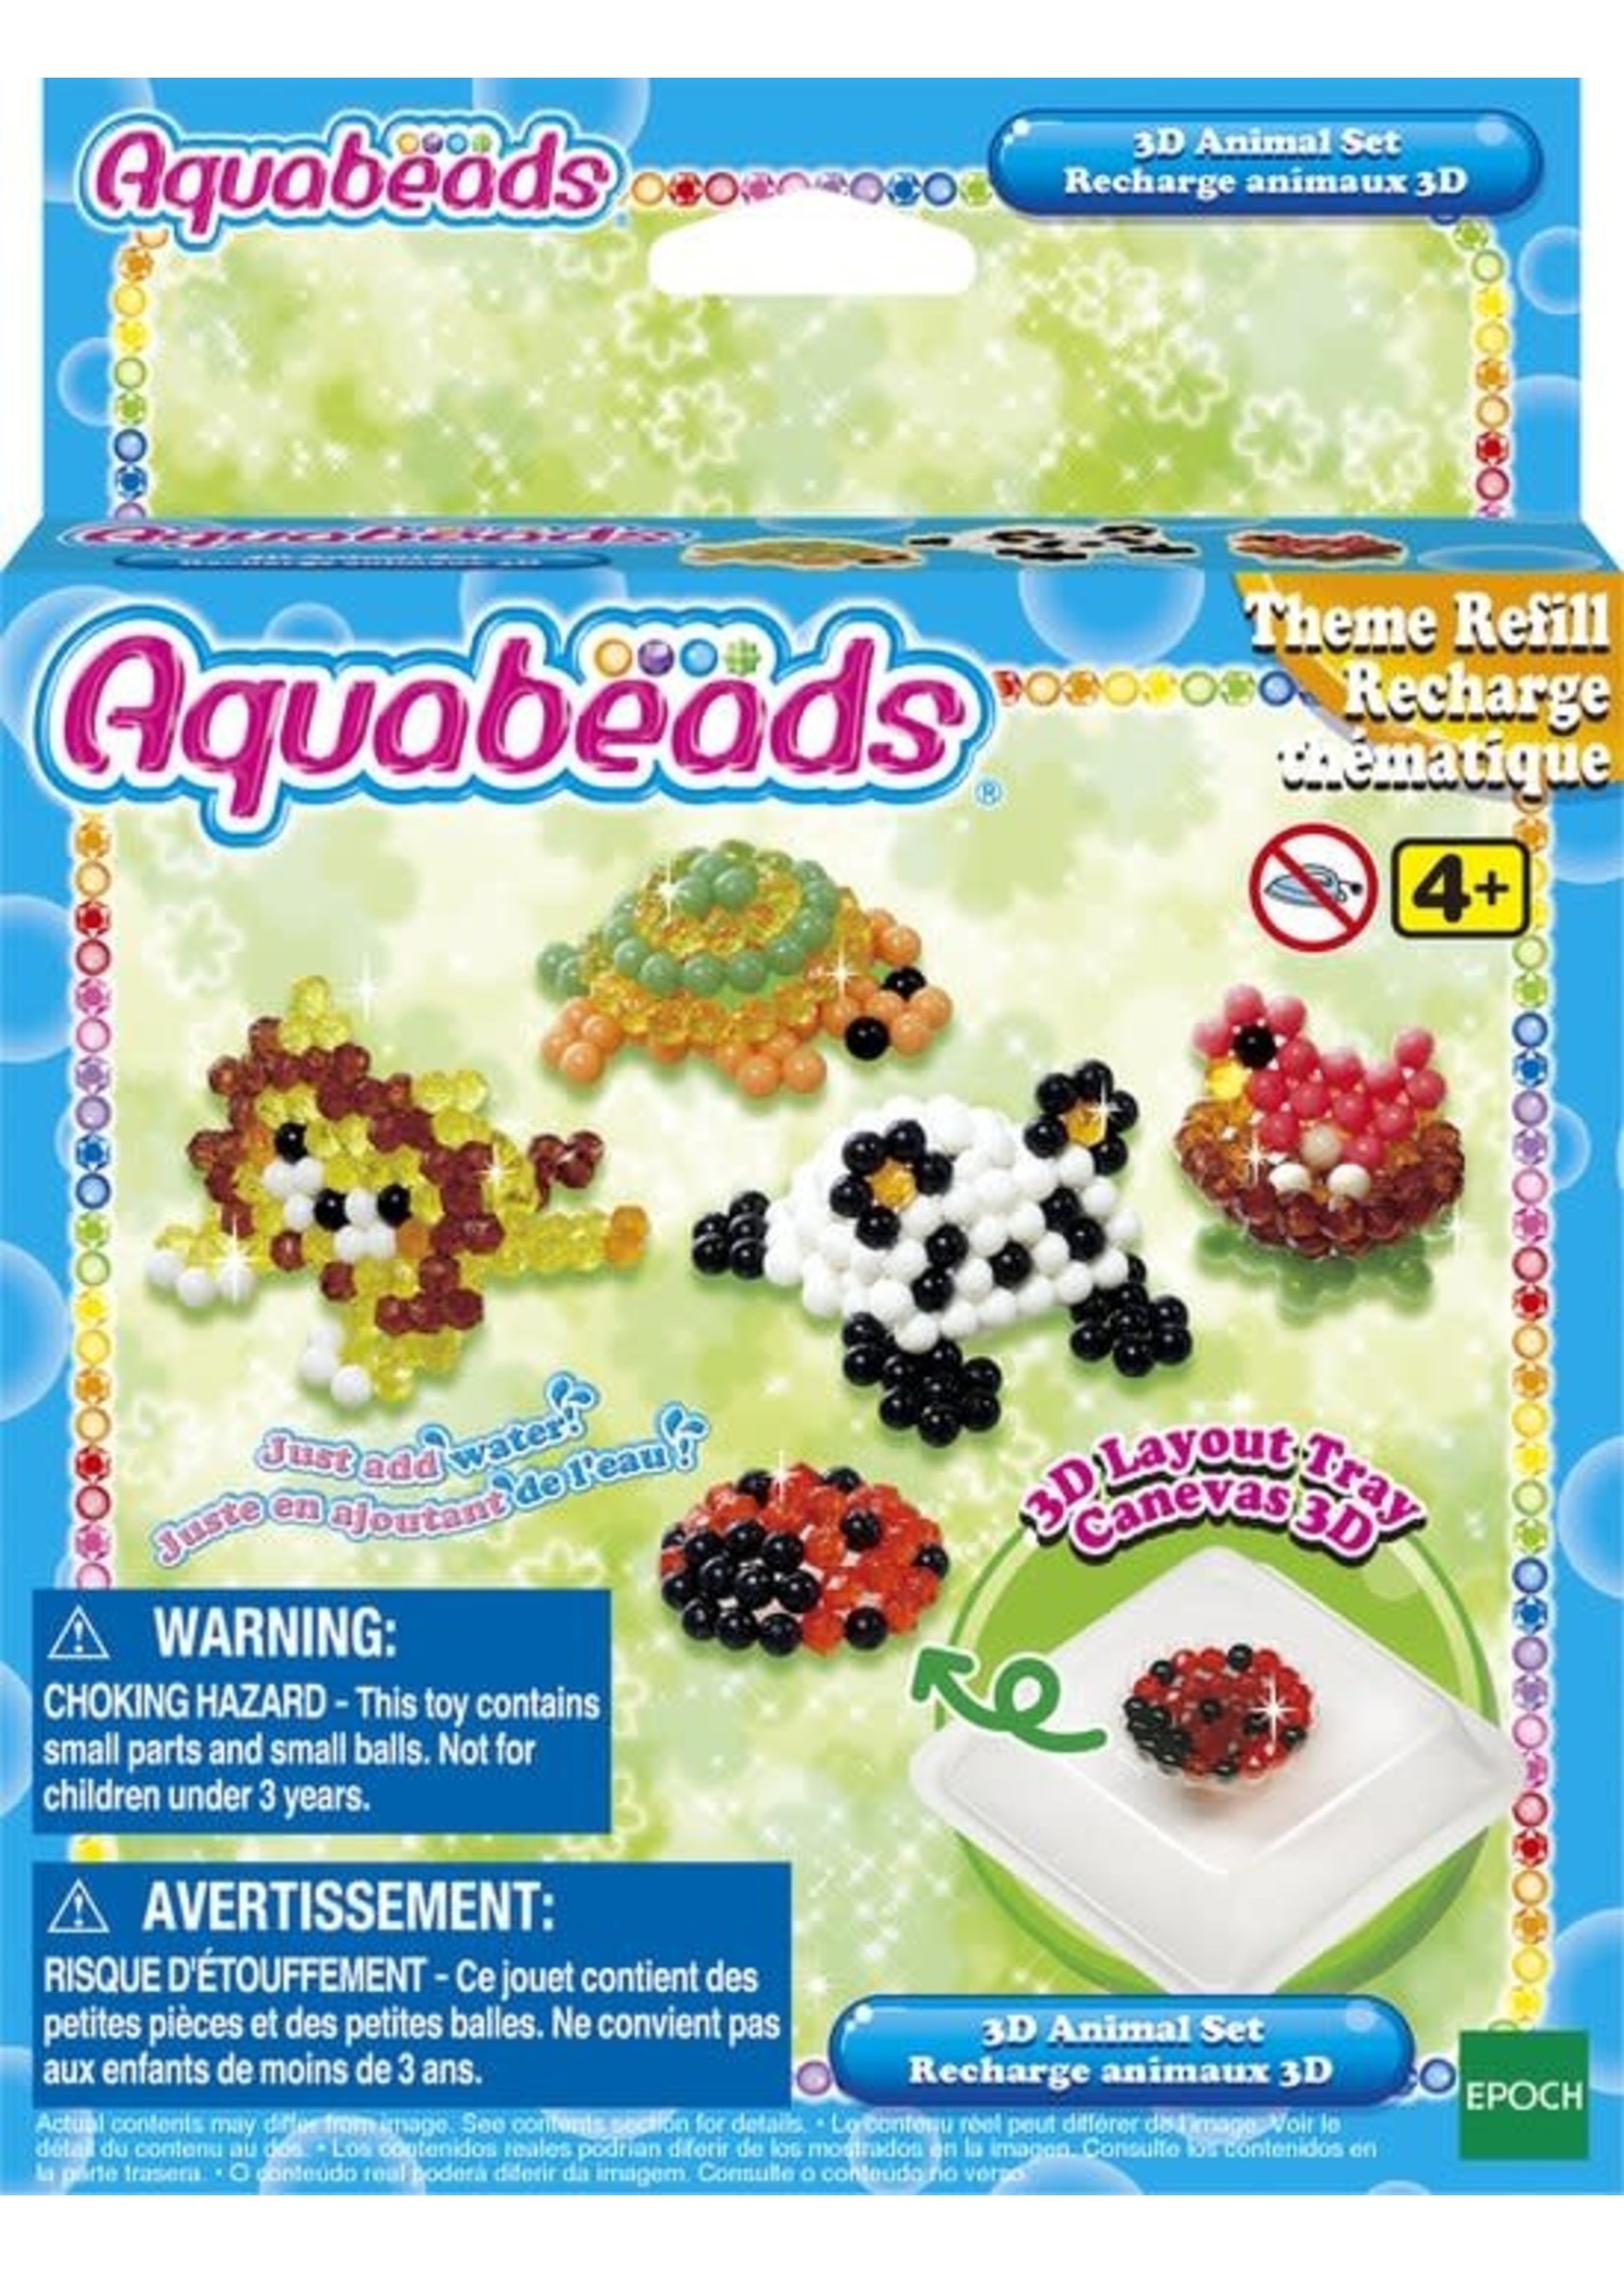 Aquabeads Aquabeads thema navulling 3D dierenset